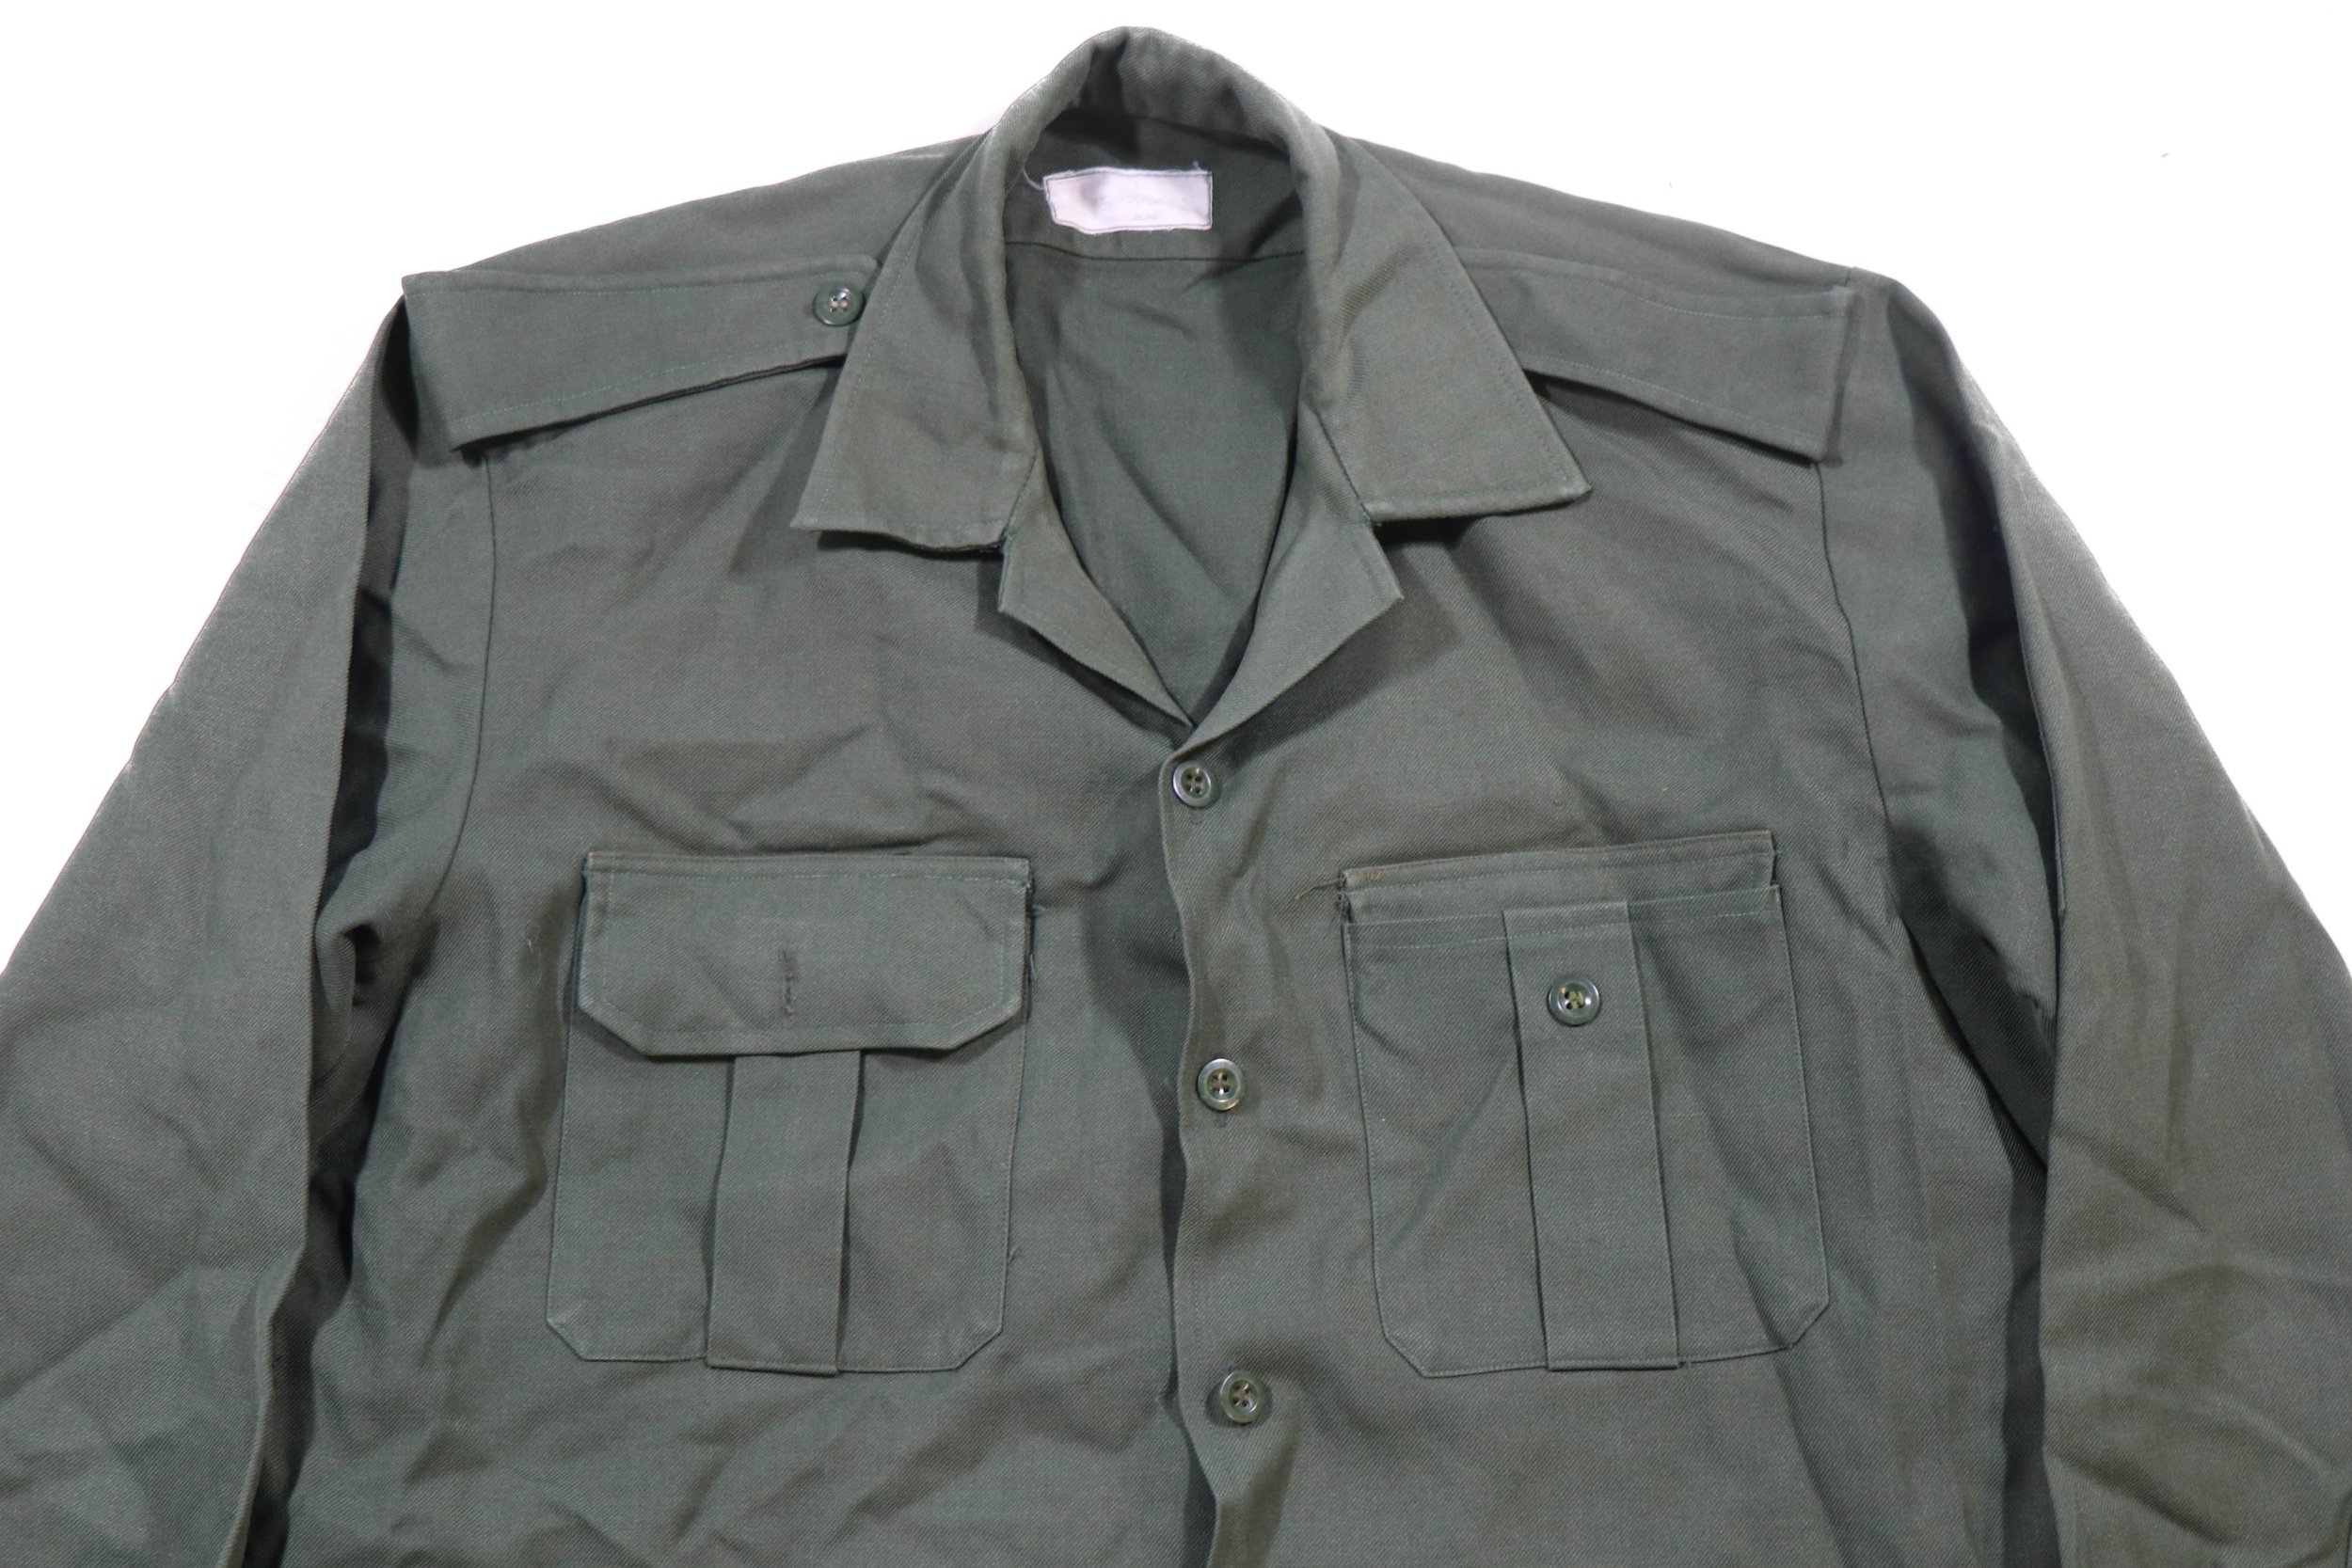 Iraqi Green Army Jacket — Iraqi Militaria